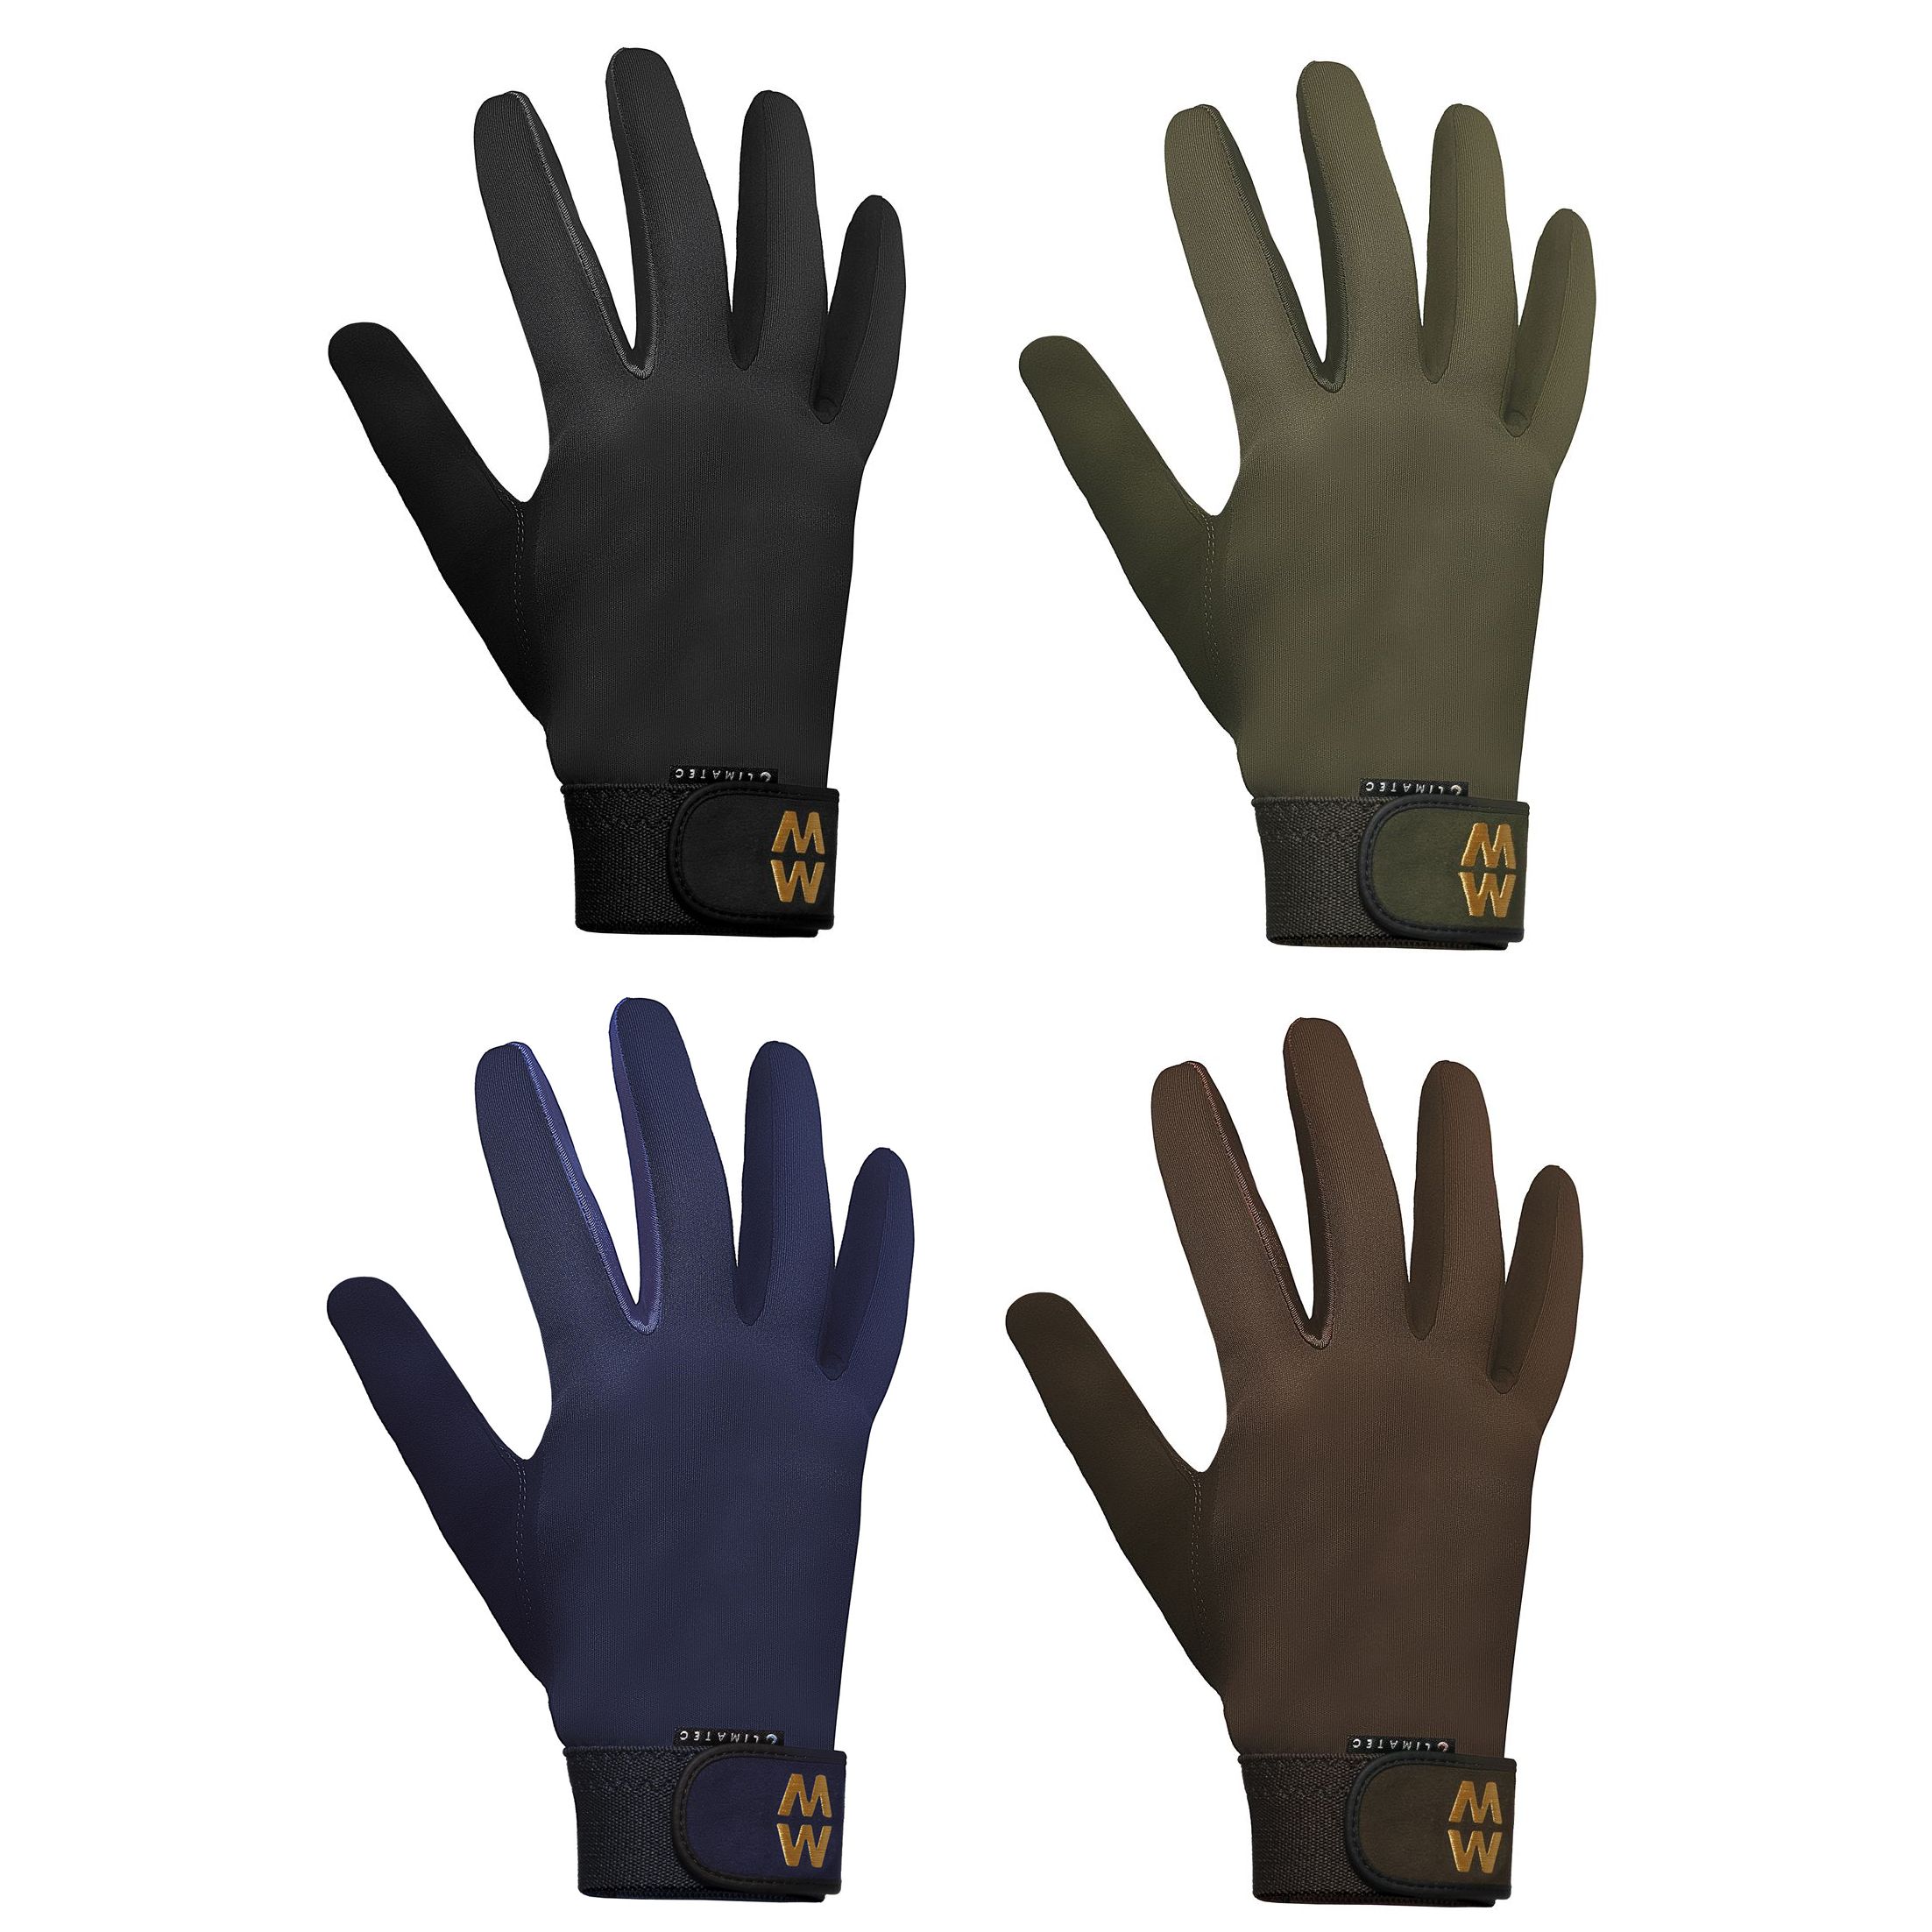 BN Clearance Aquatec Climatec Long Cuff MacWet Premium Sports Gloves 